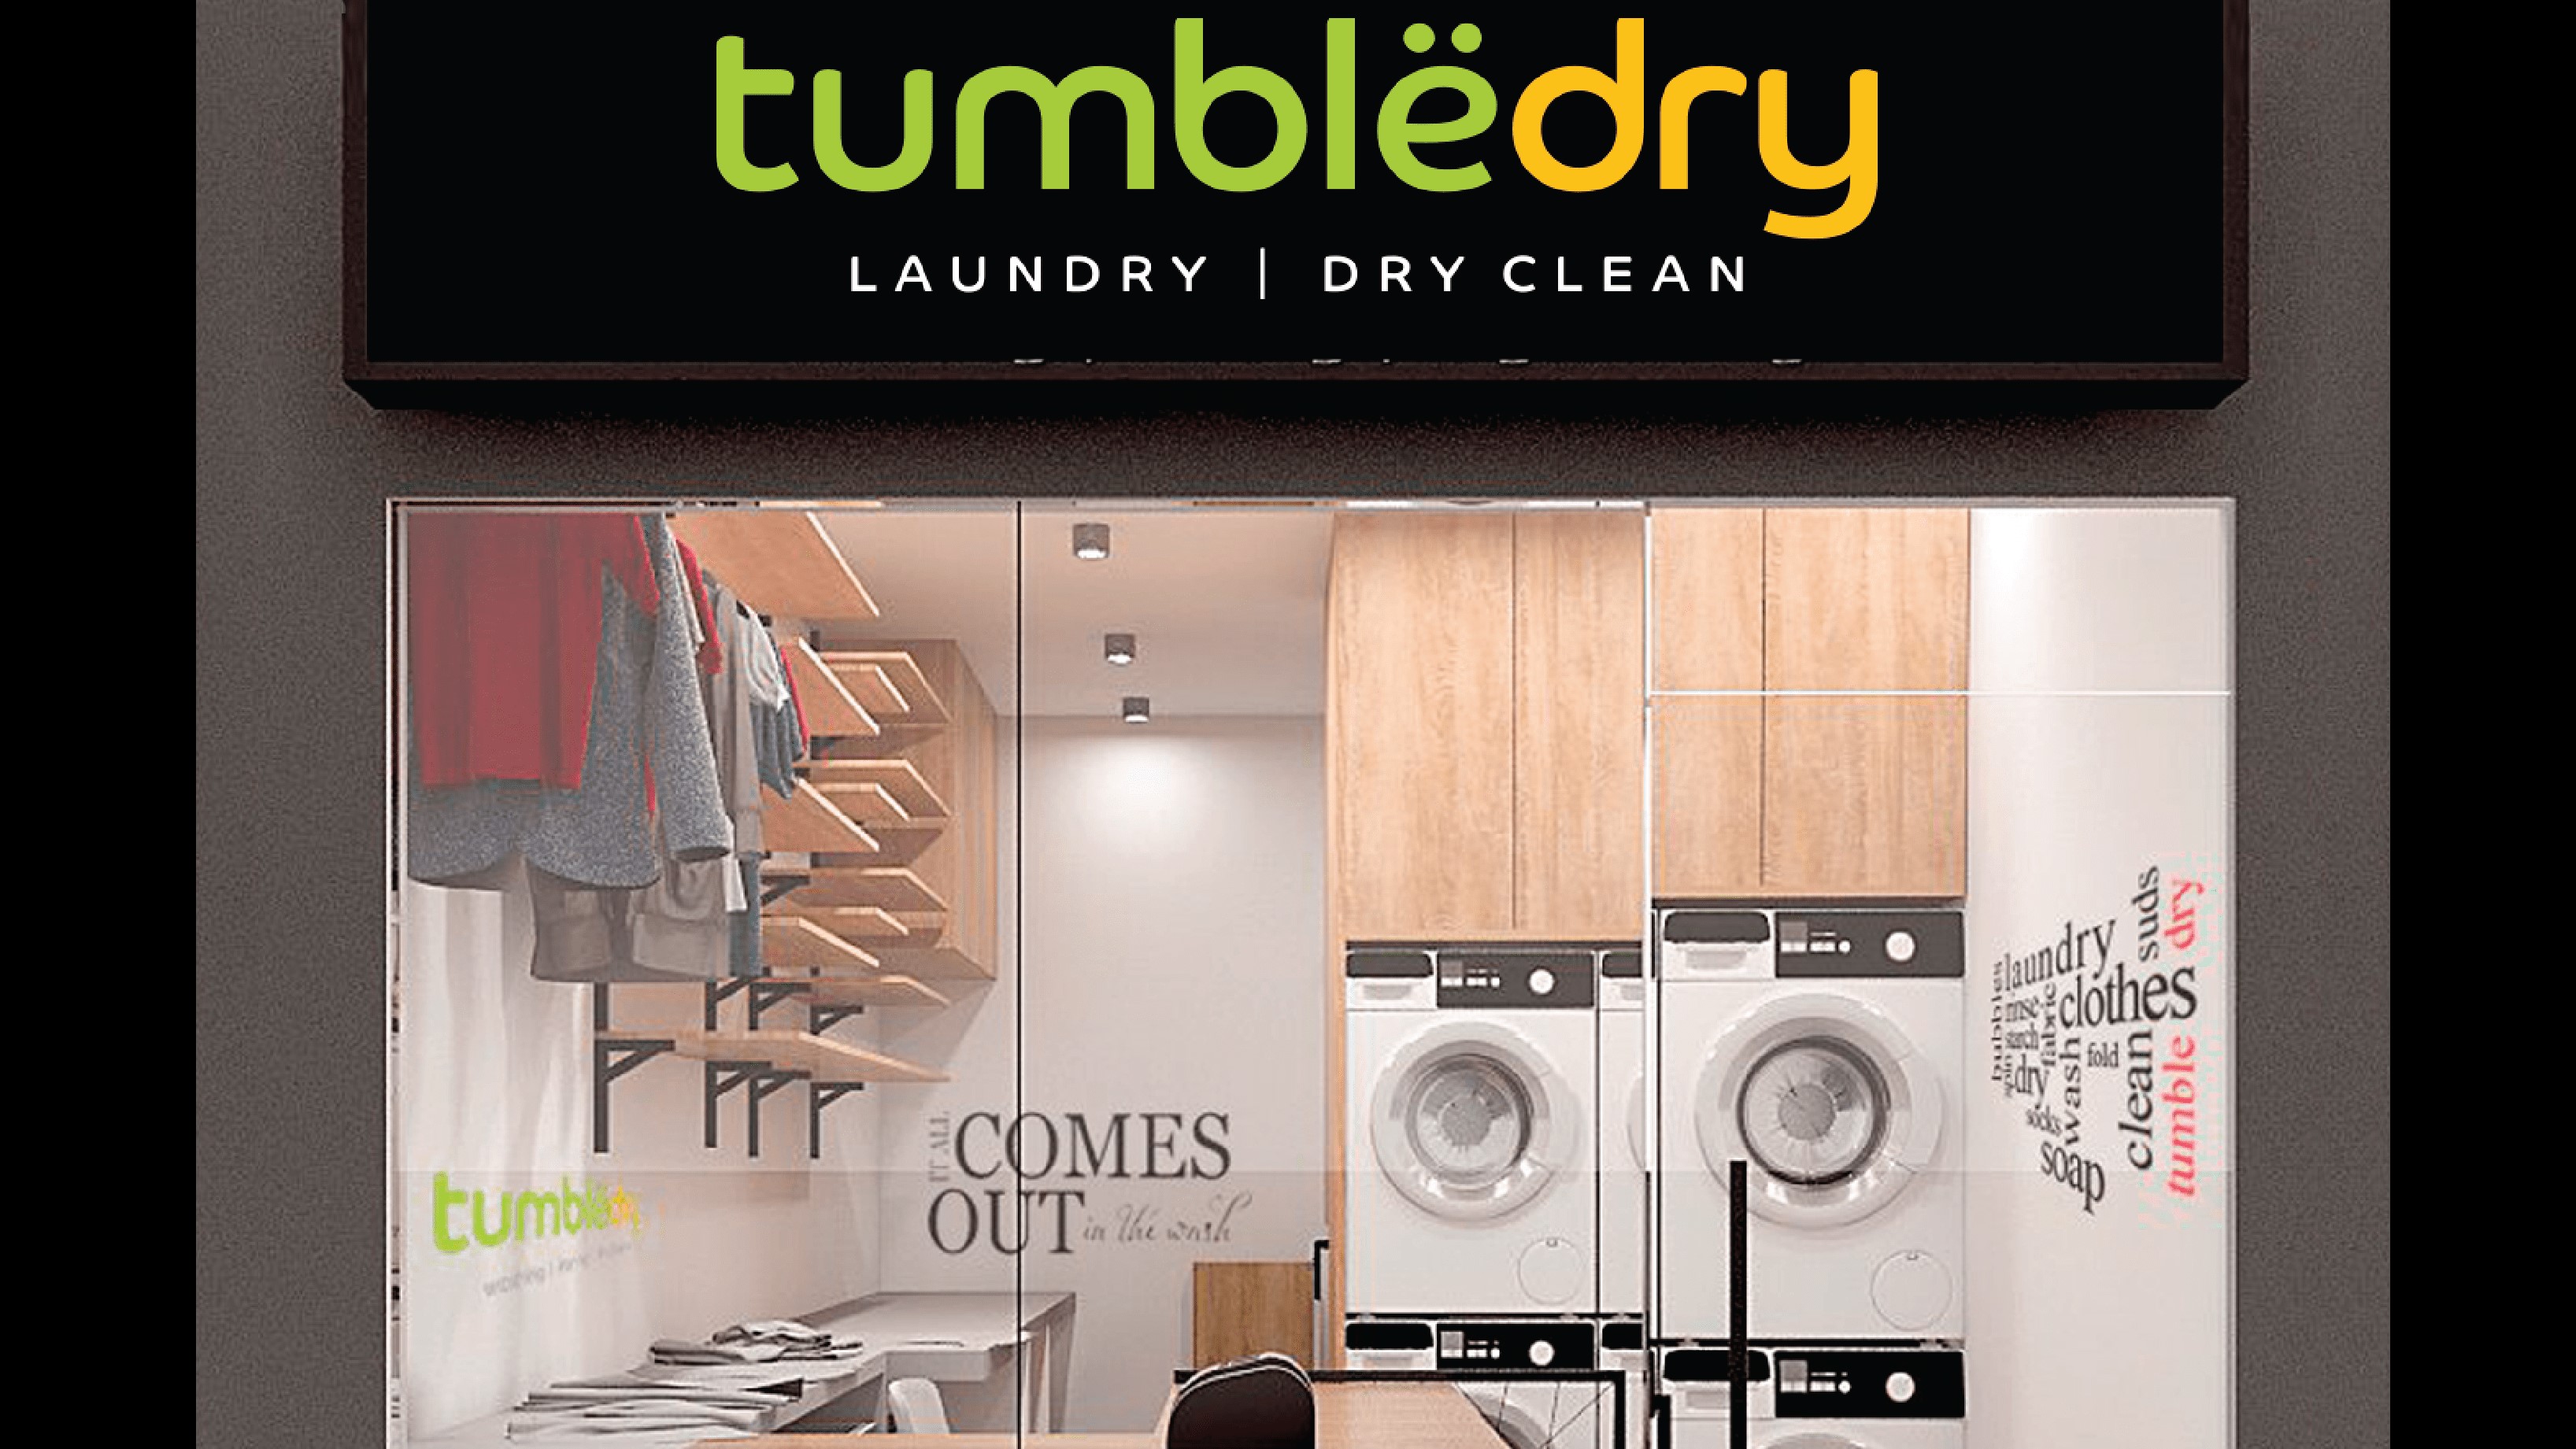 Tumbledry Laundry Service - Founders